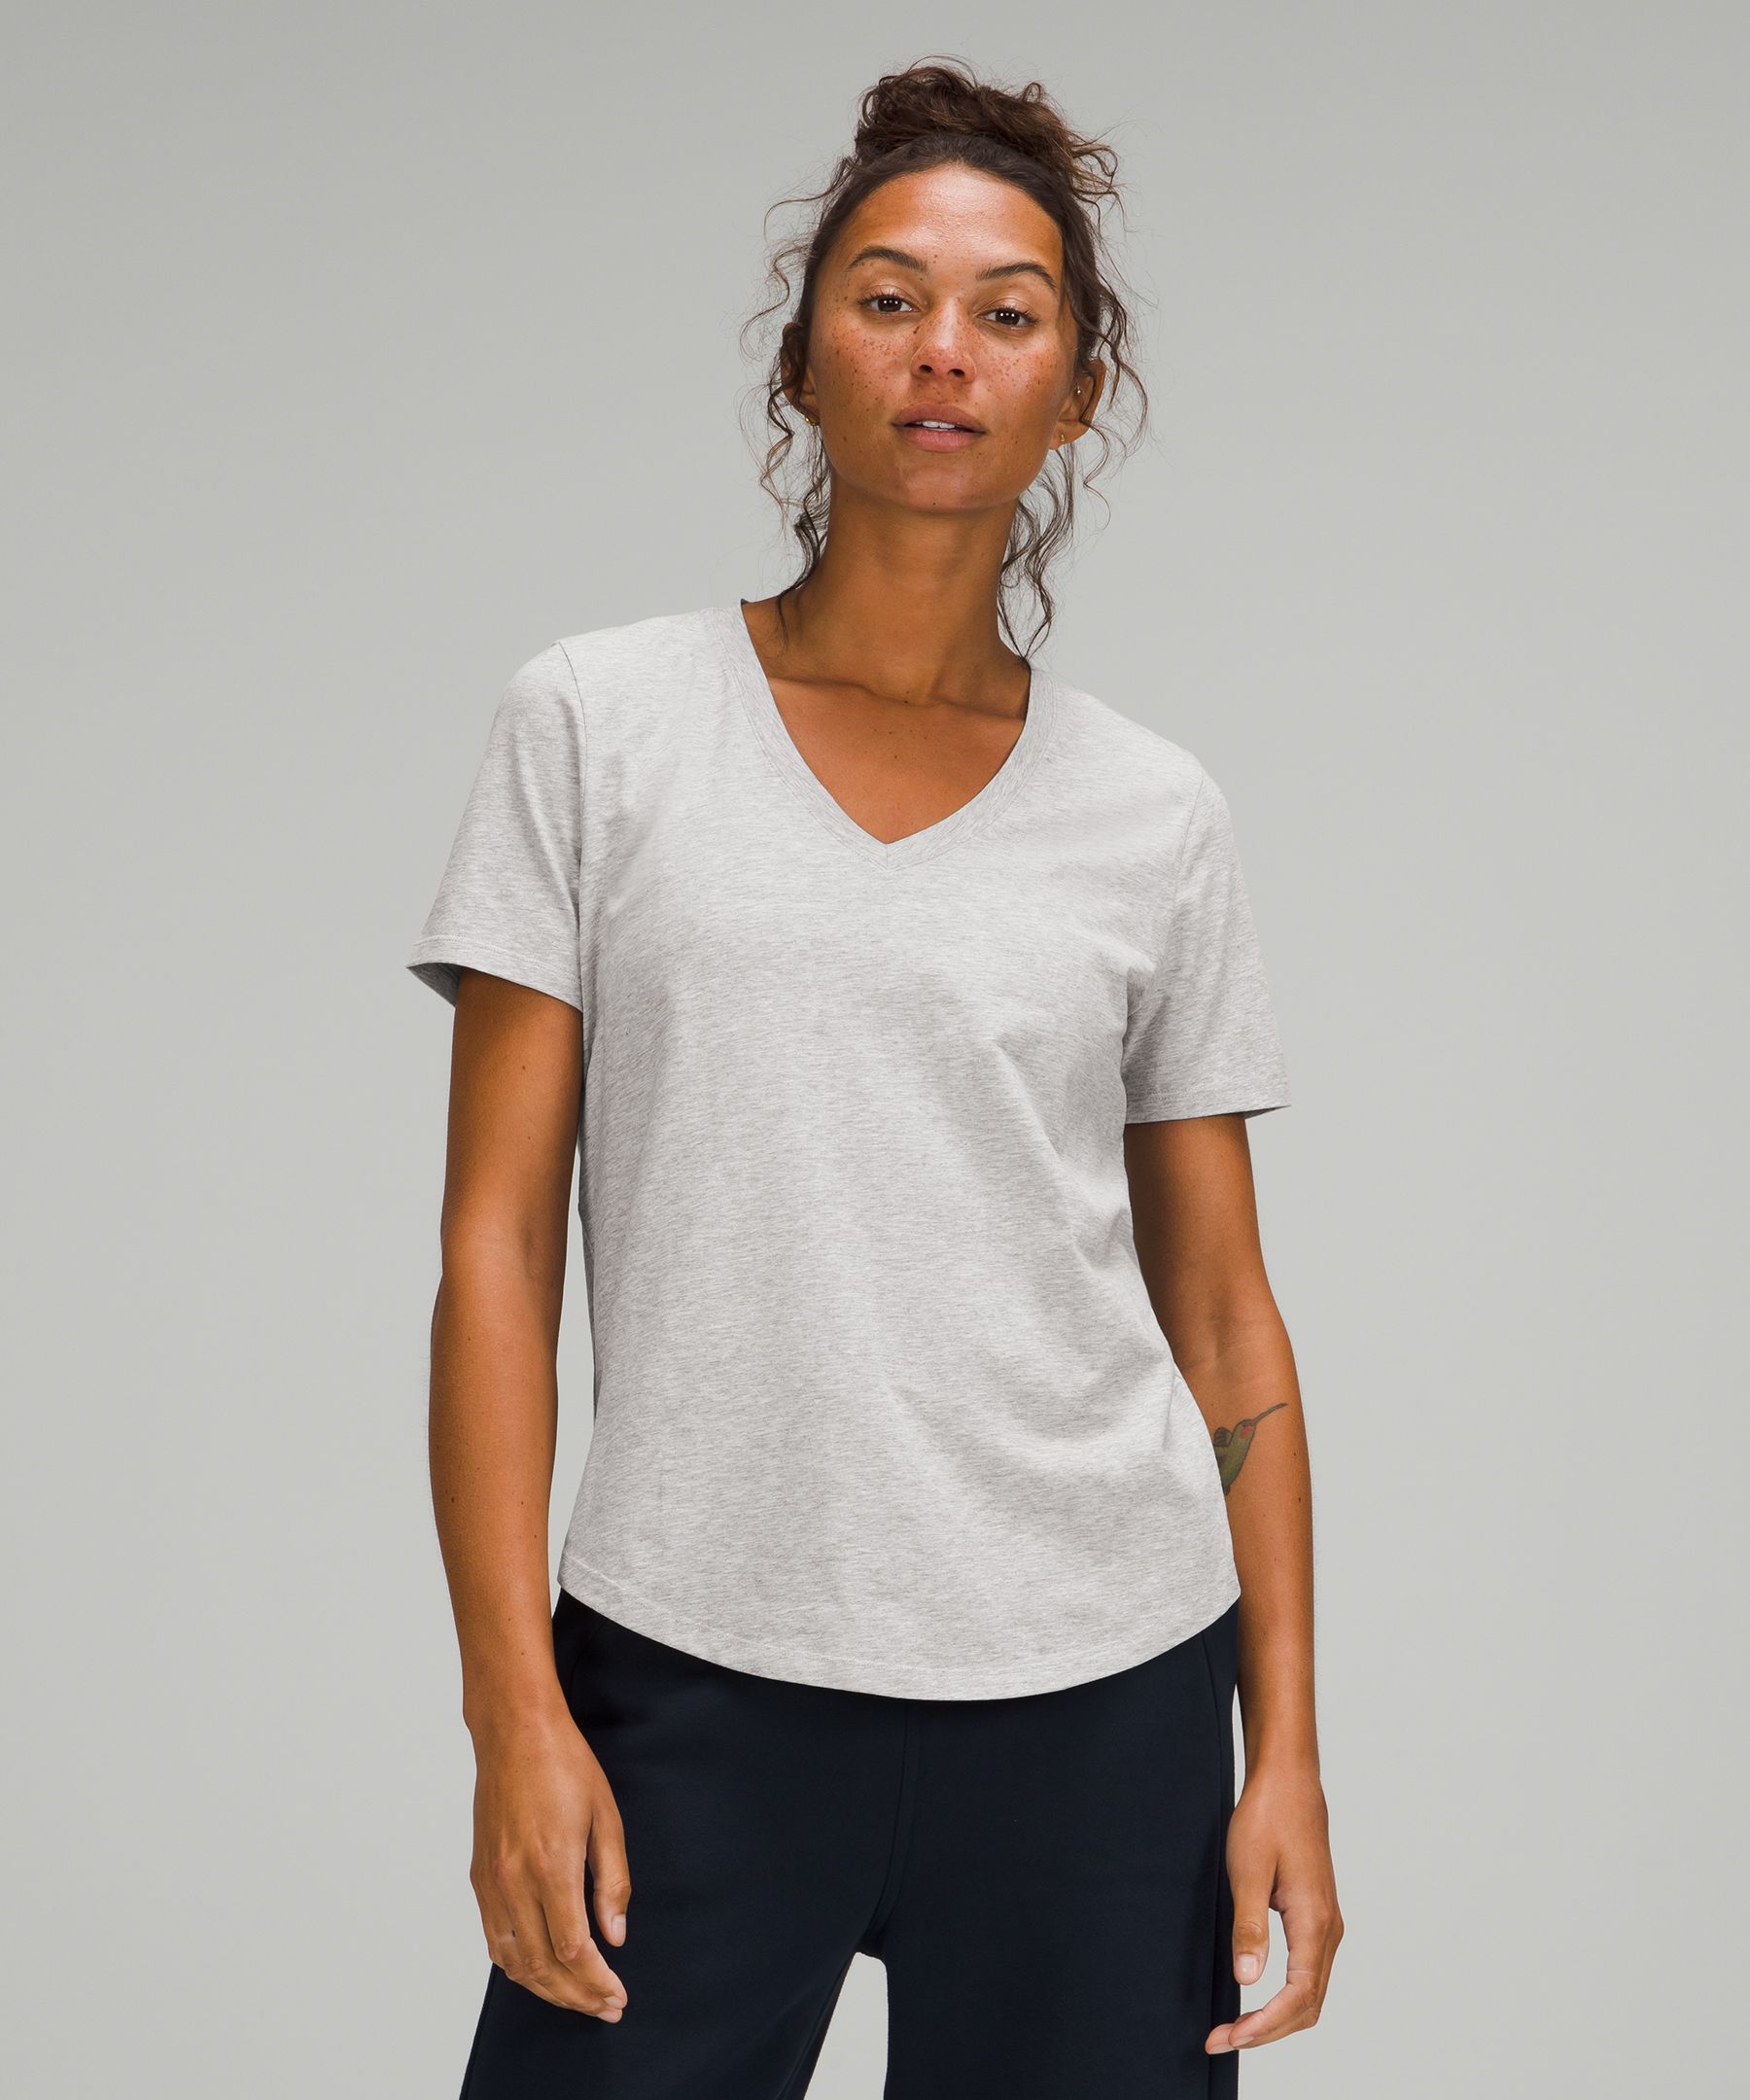 Lululemon Love V-neck T-shirt In Heathered Core Light Grey